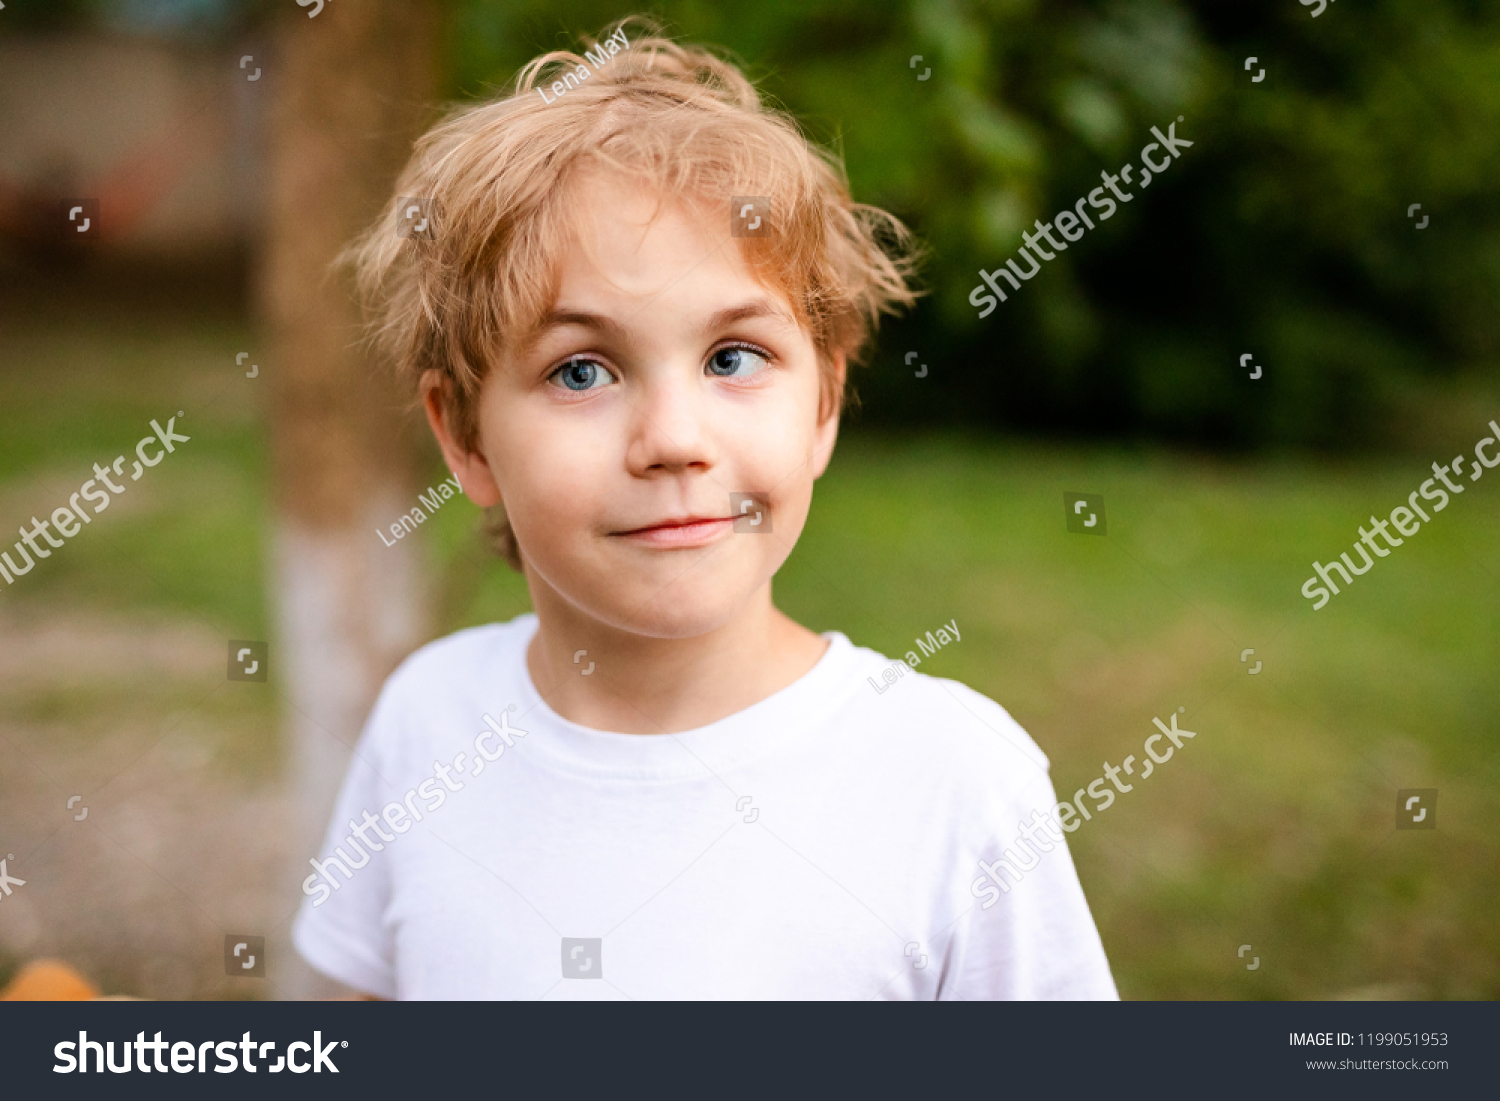 Blonde smiling boy with strabismus in warm park #1199051953